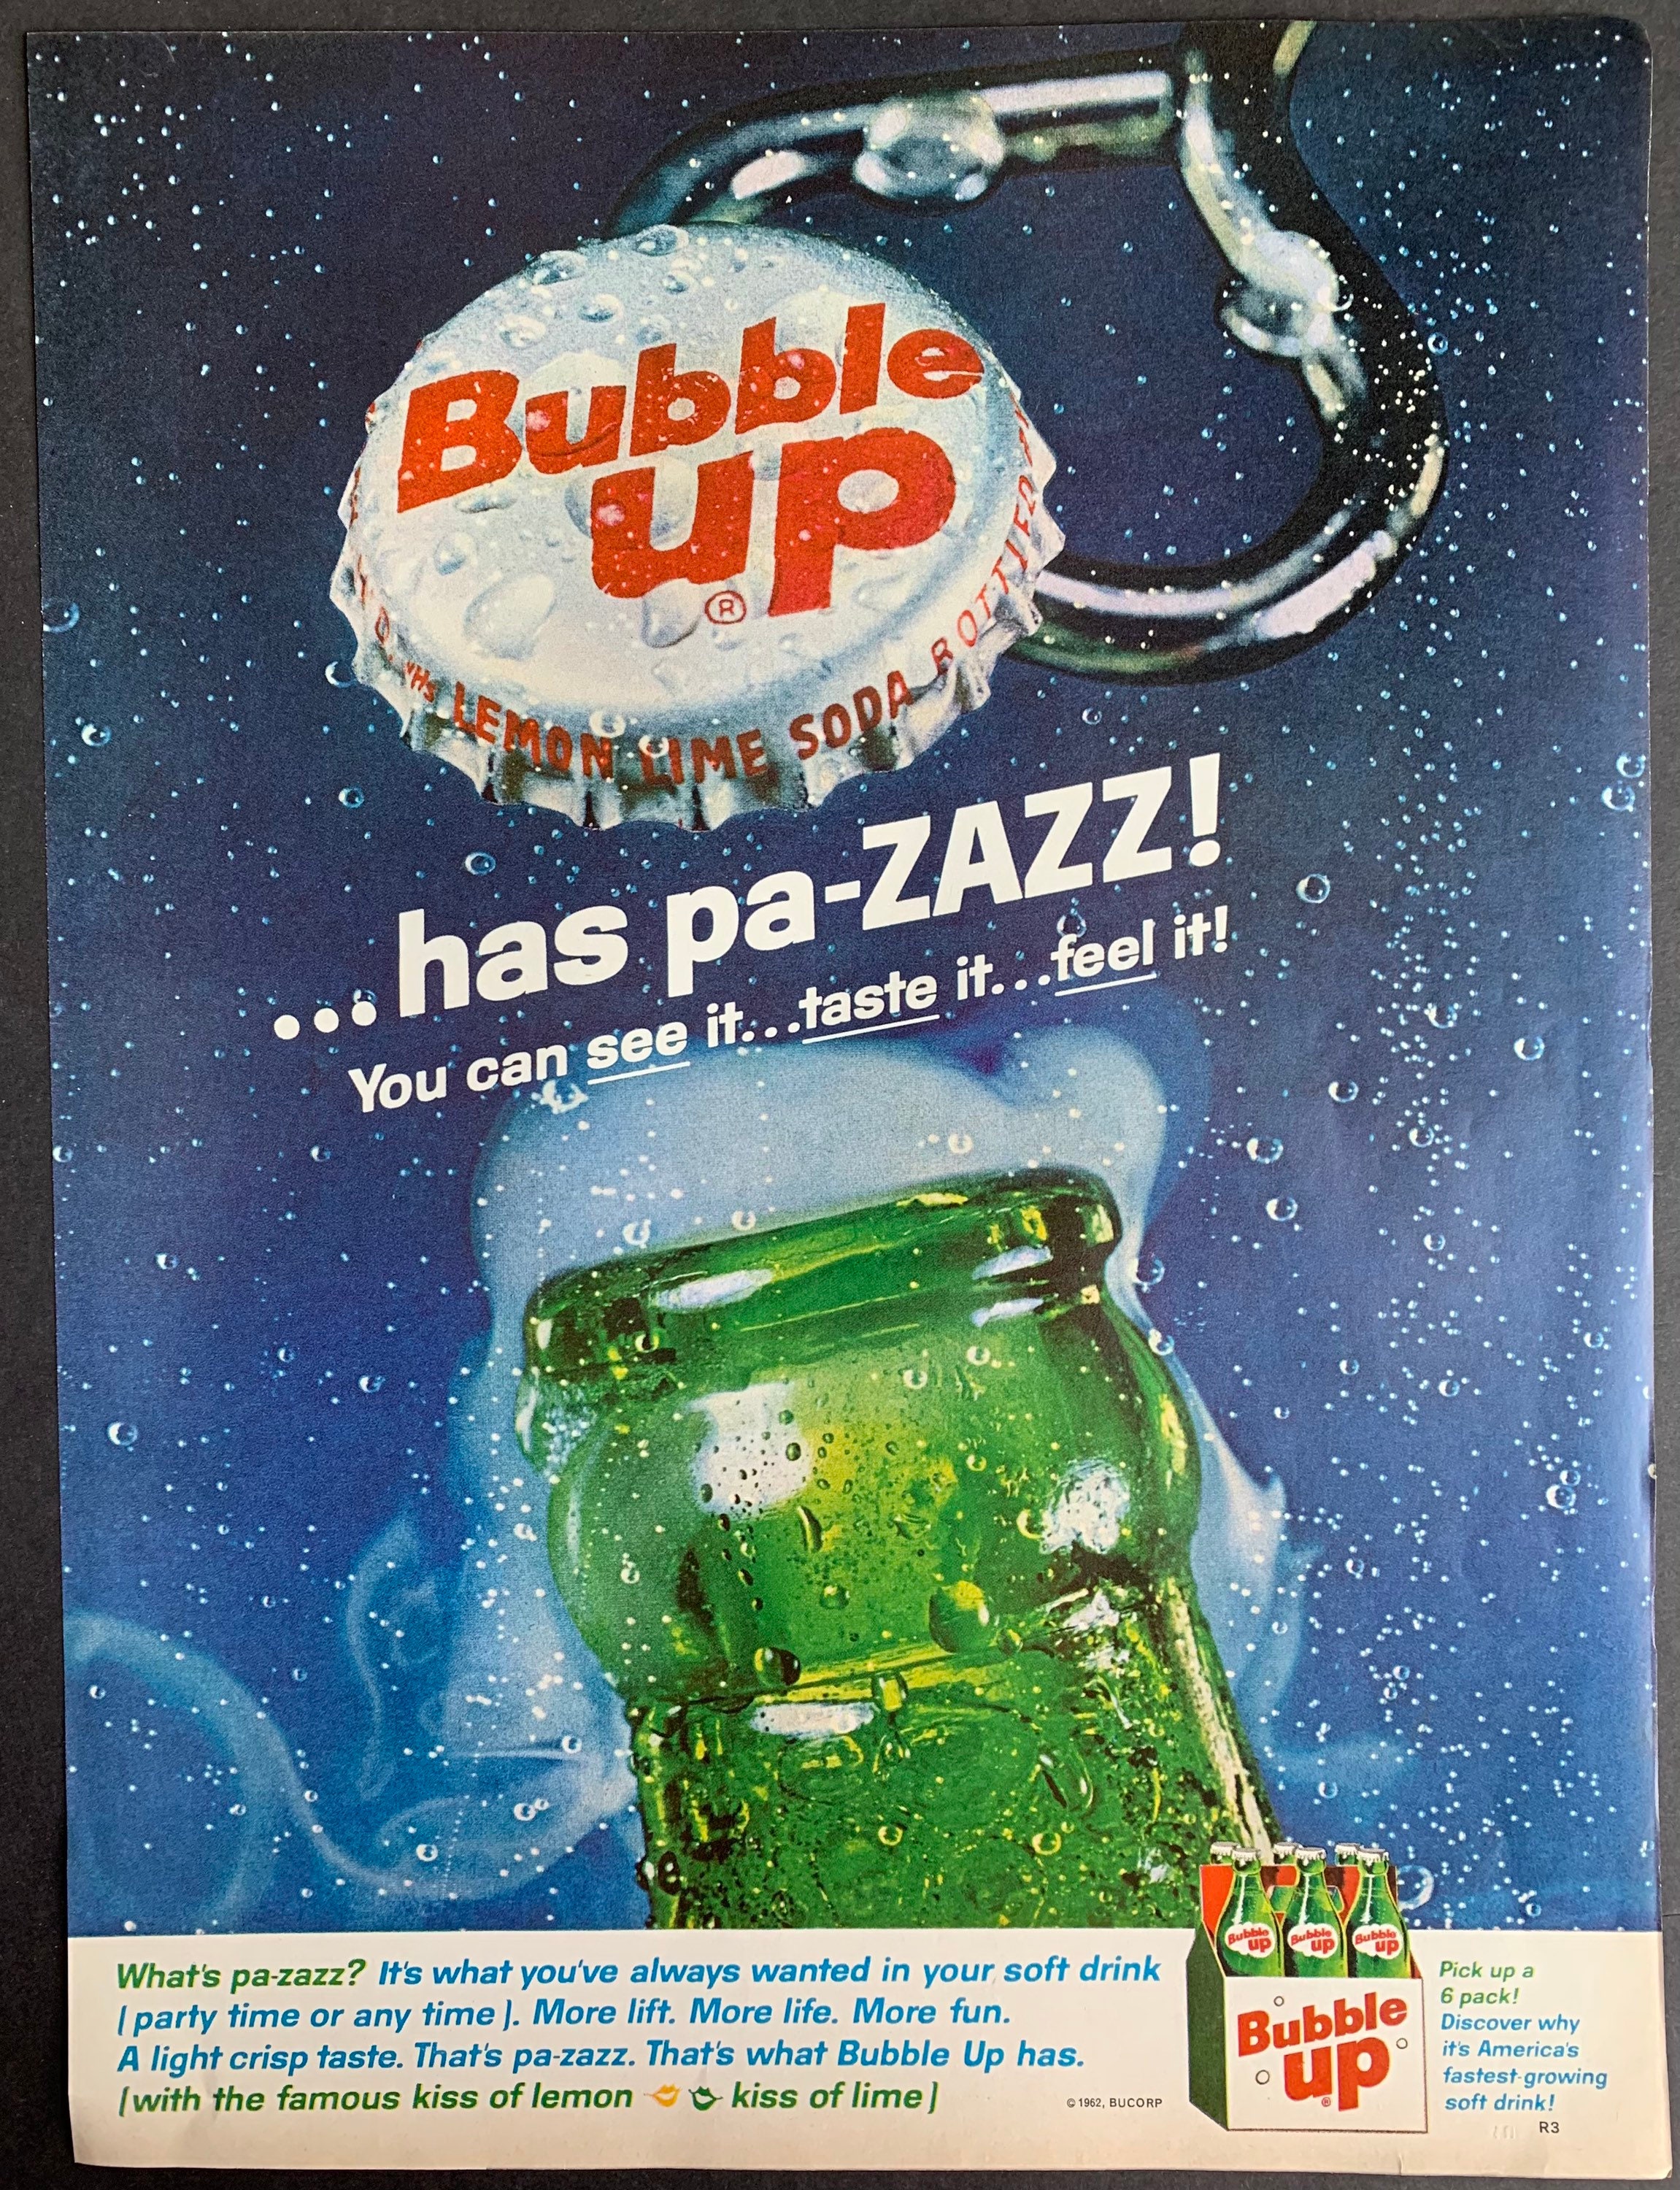 1962 BUBBLE UP Soda Has pa-ZAZZ VINTAGE ADVERTISEMENT 